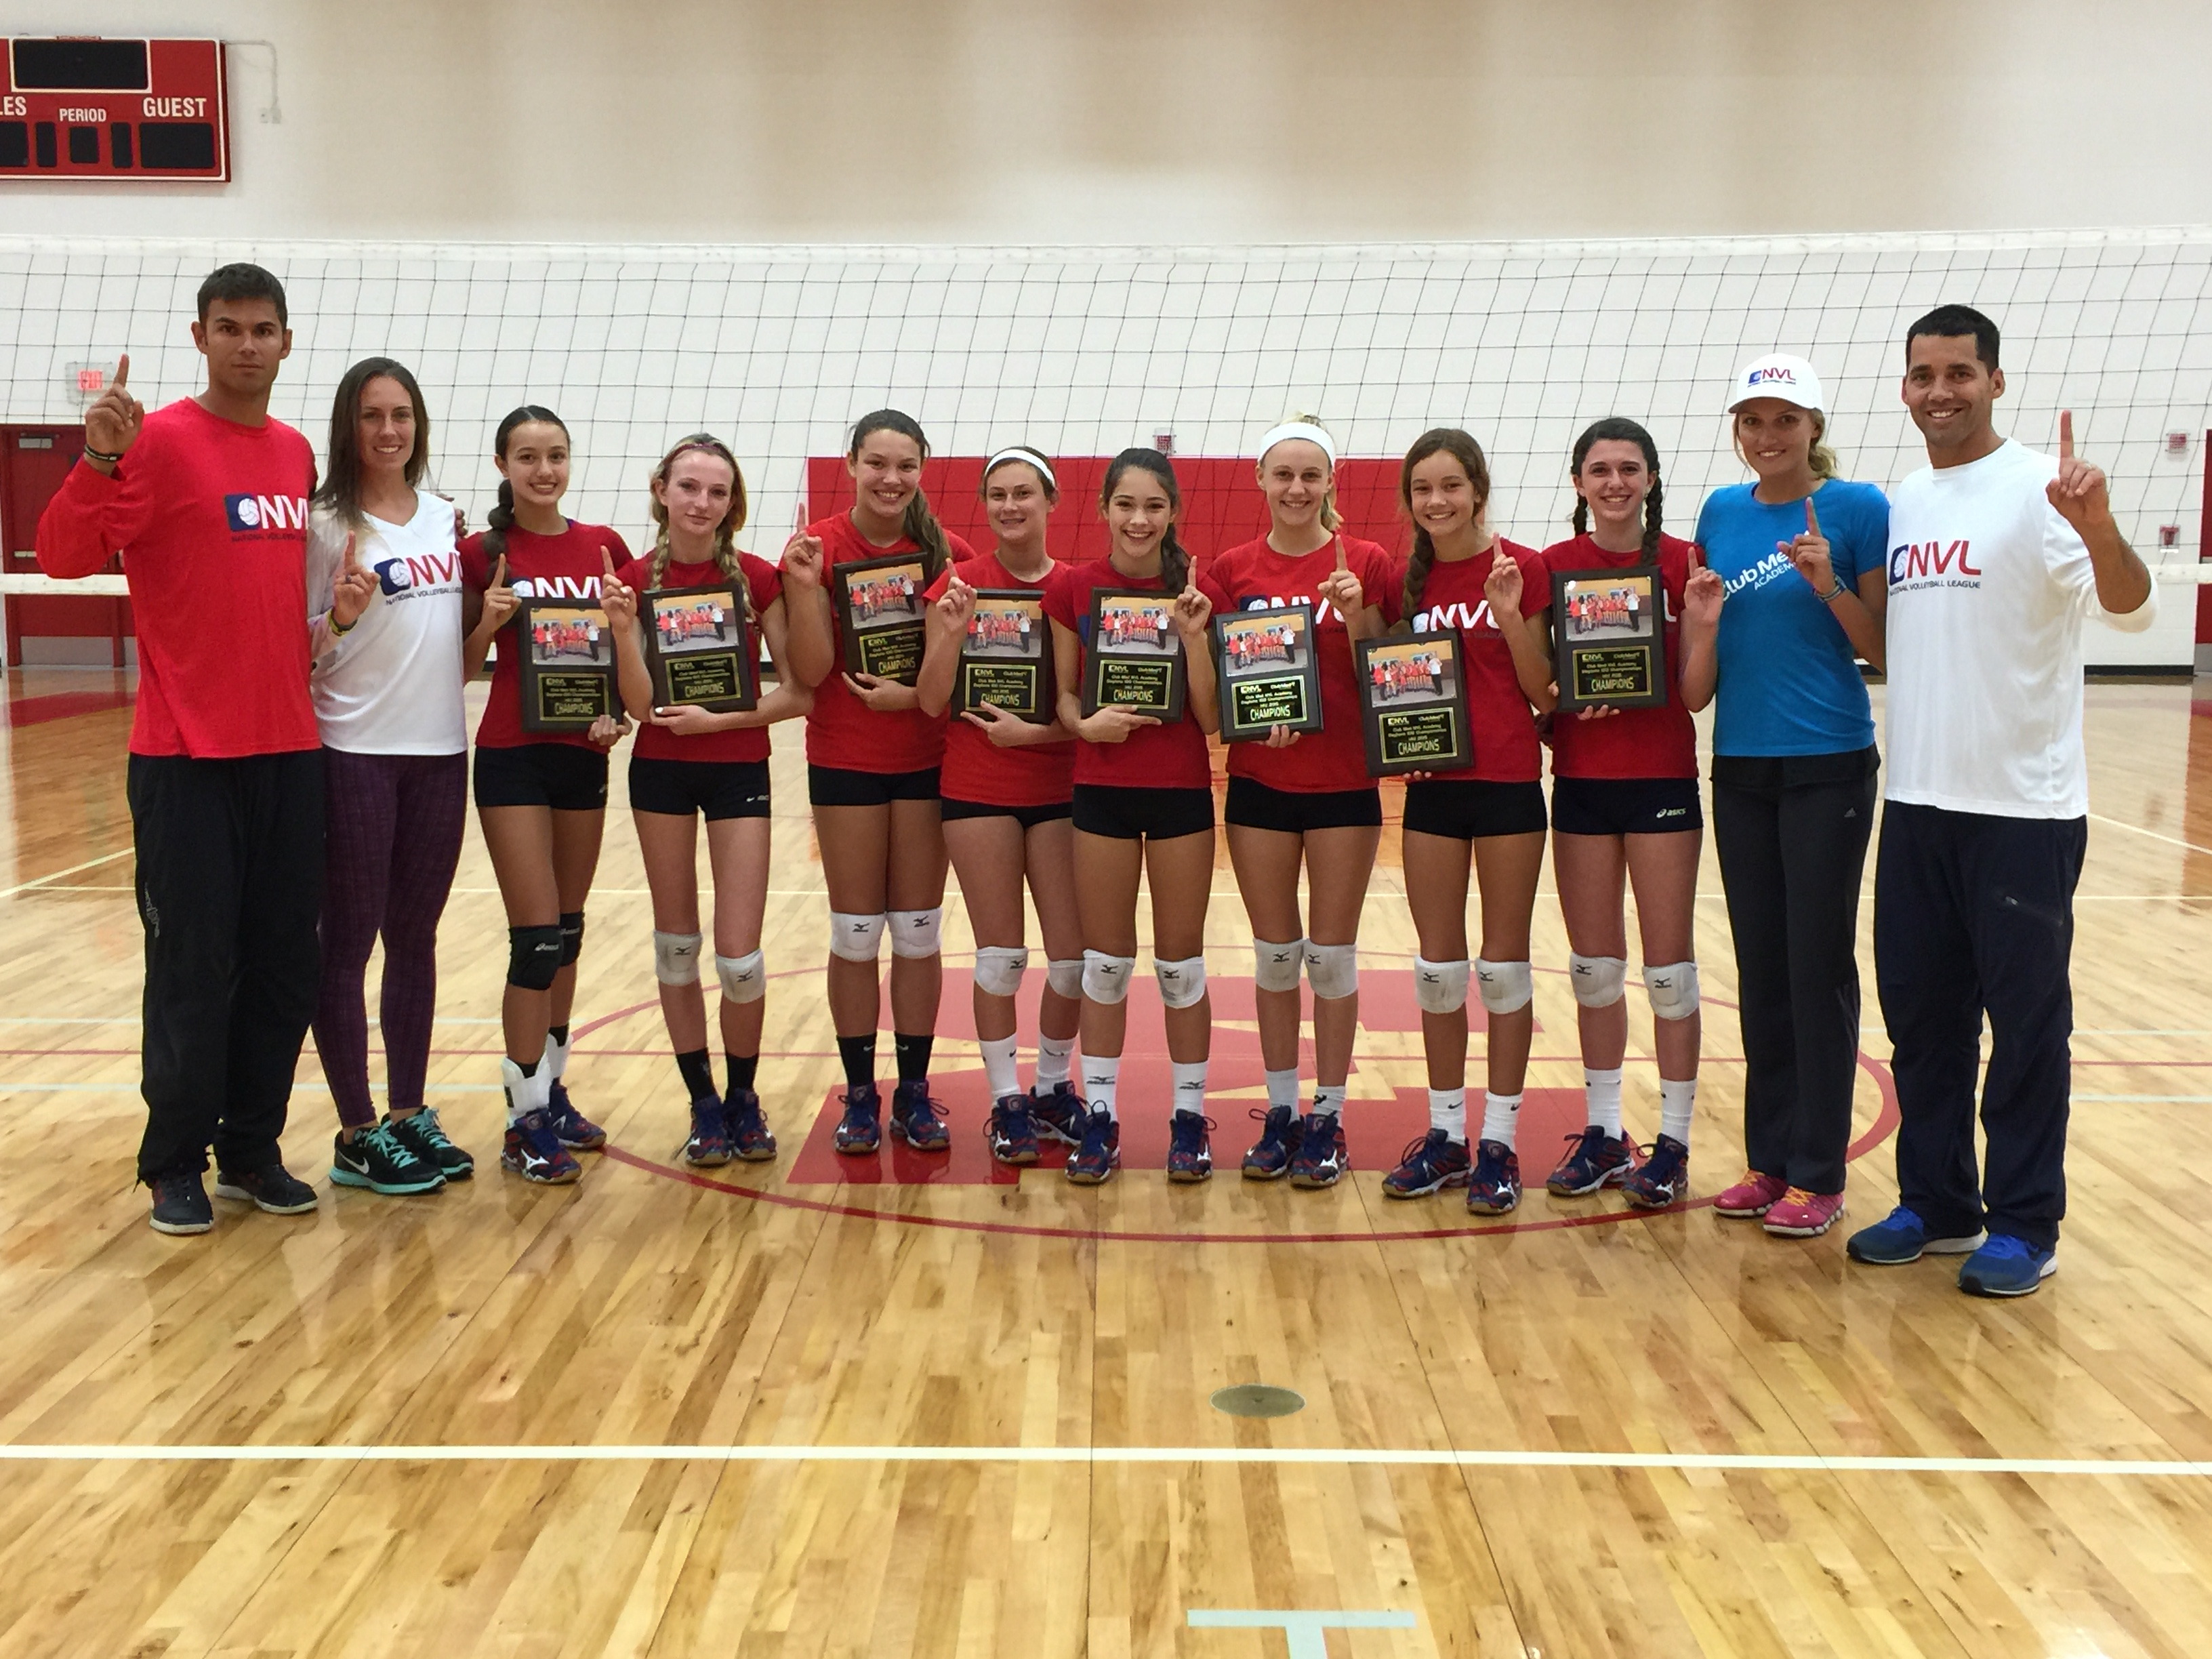 Club Med NVL Volleyball Academies Indoor/Sand Girls 14U Team  Wins Daytona 100 Tournament